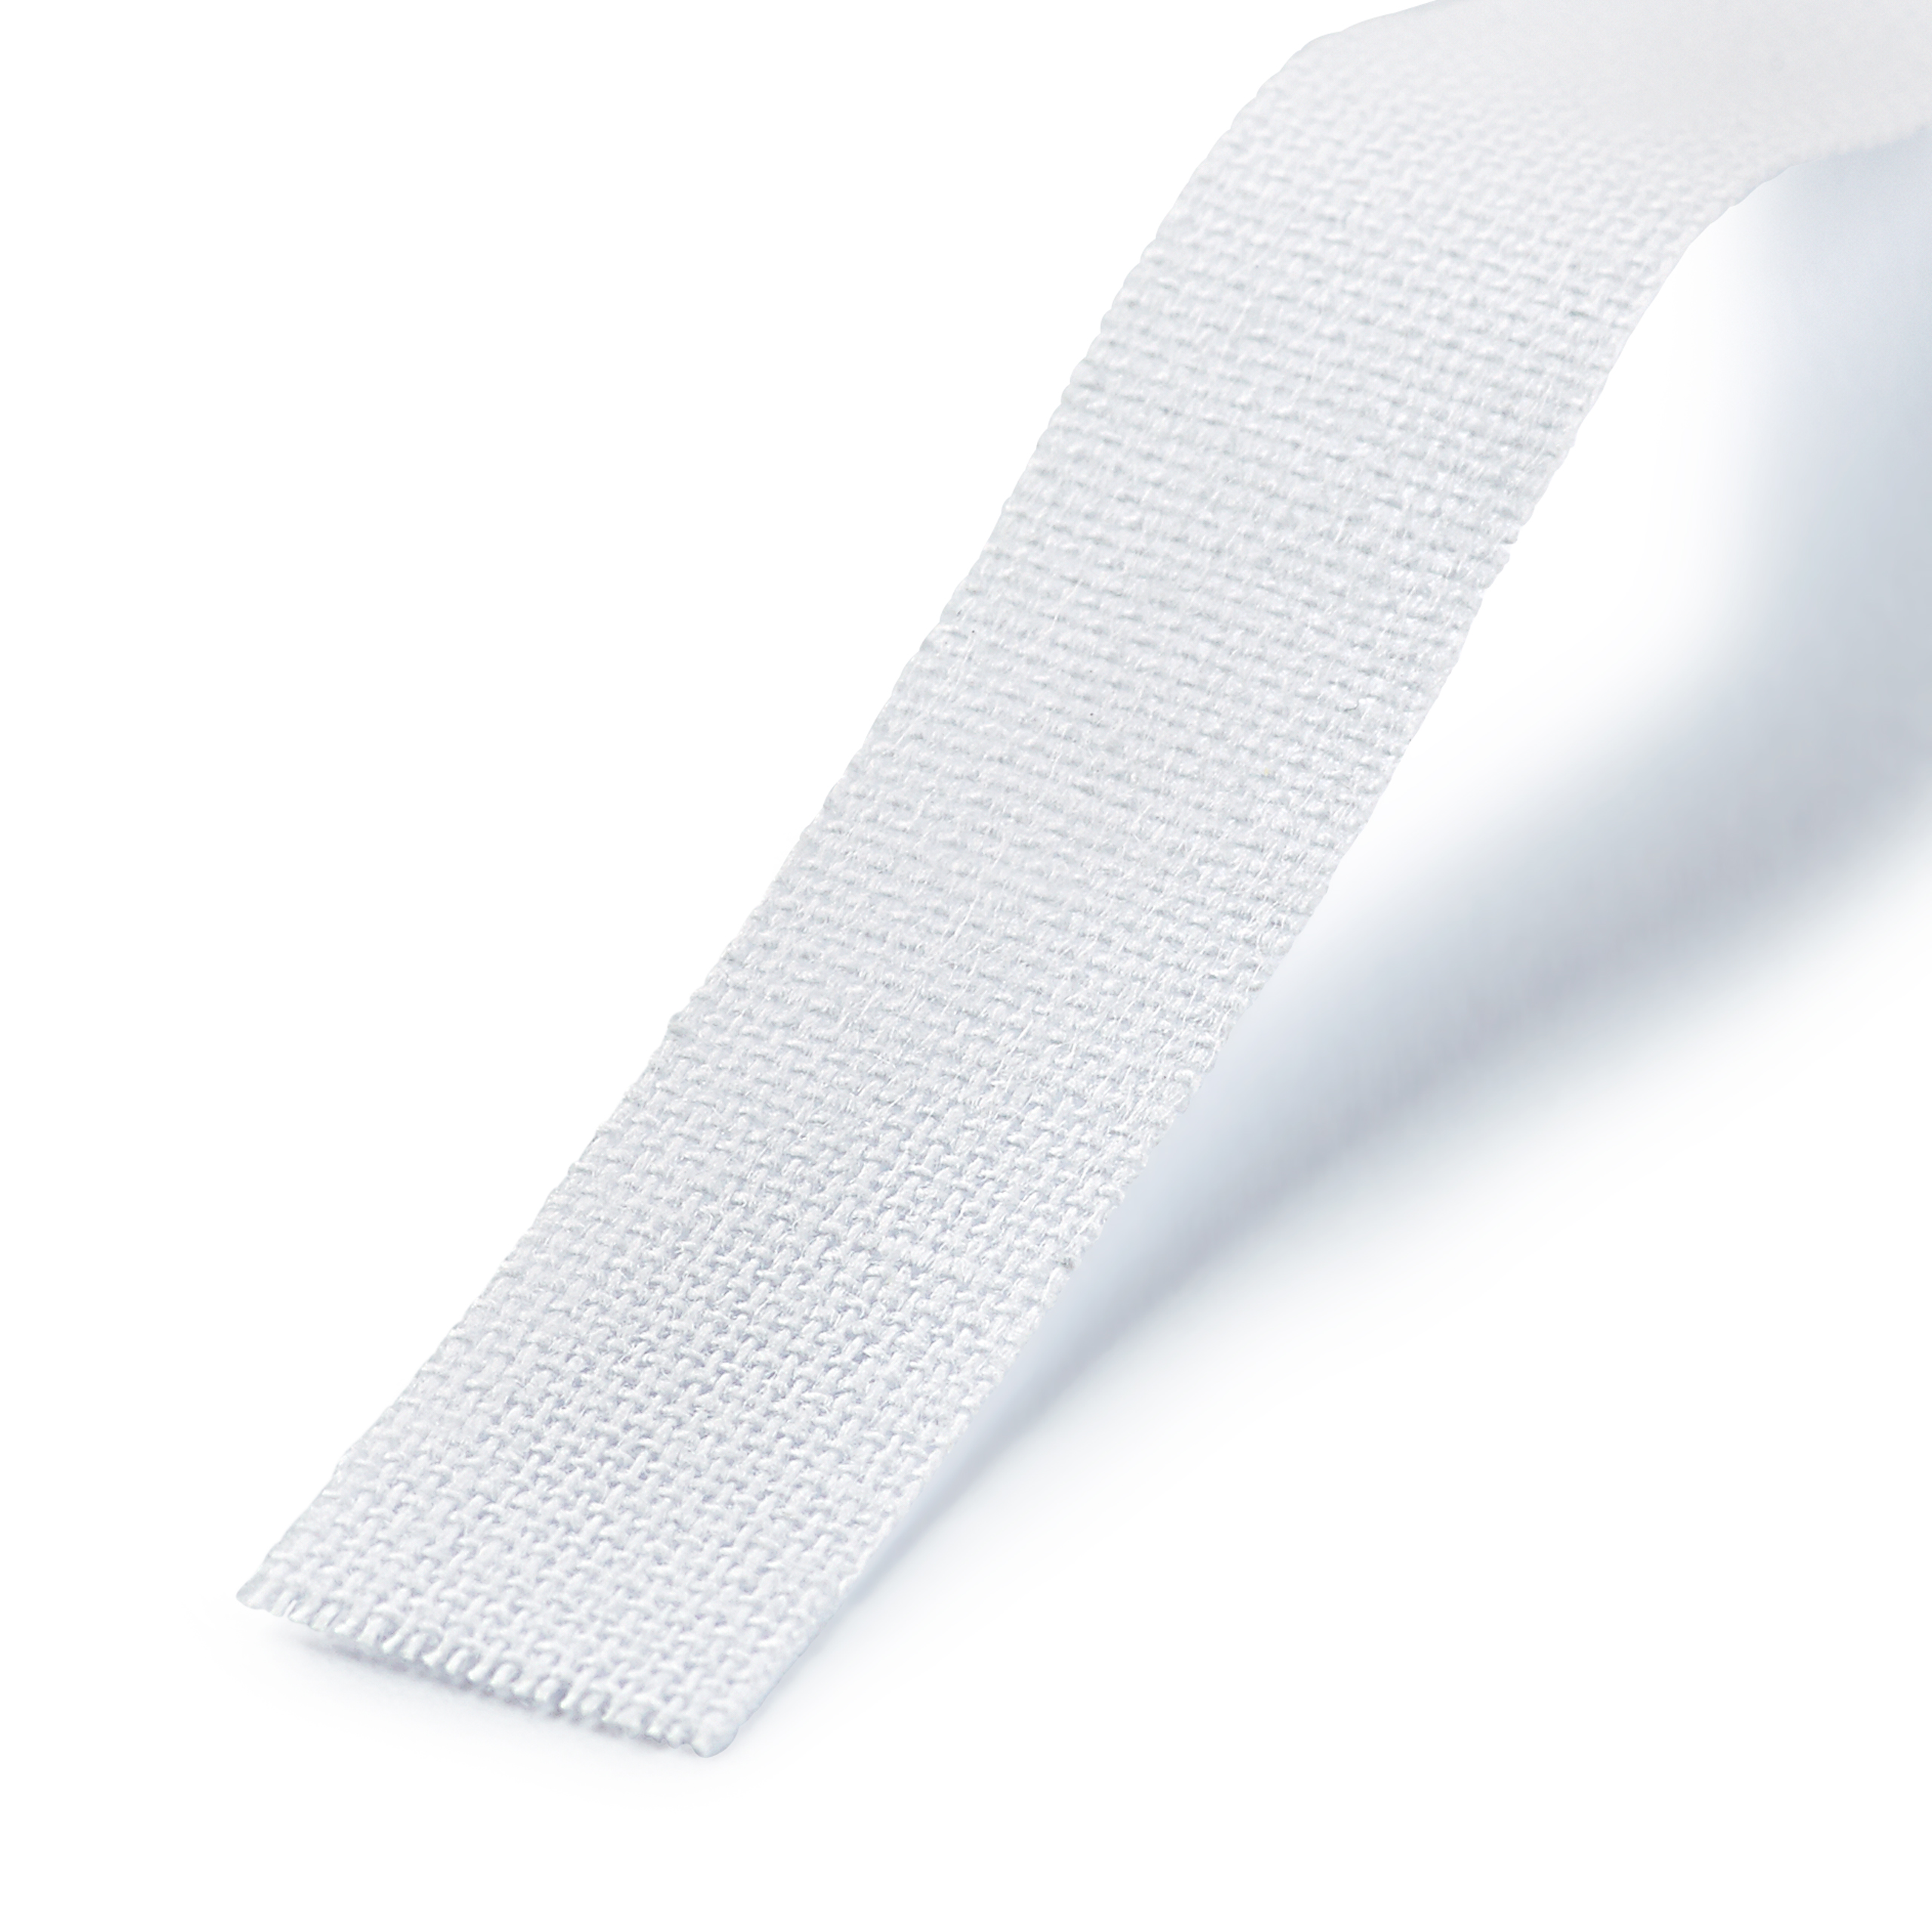 Laundry marking tape iron-on CO 11 mm white, 3 m